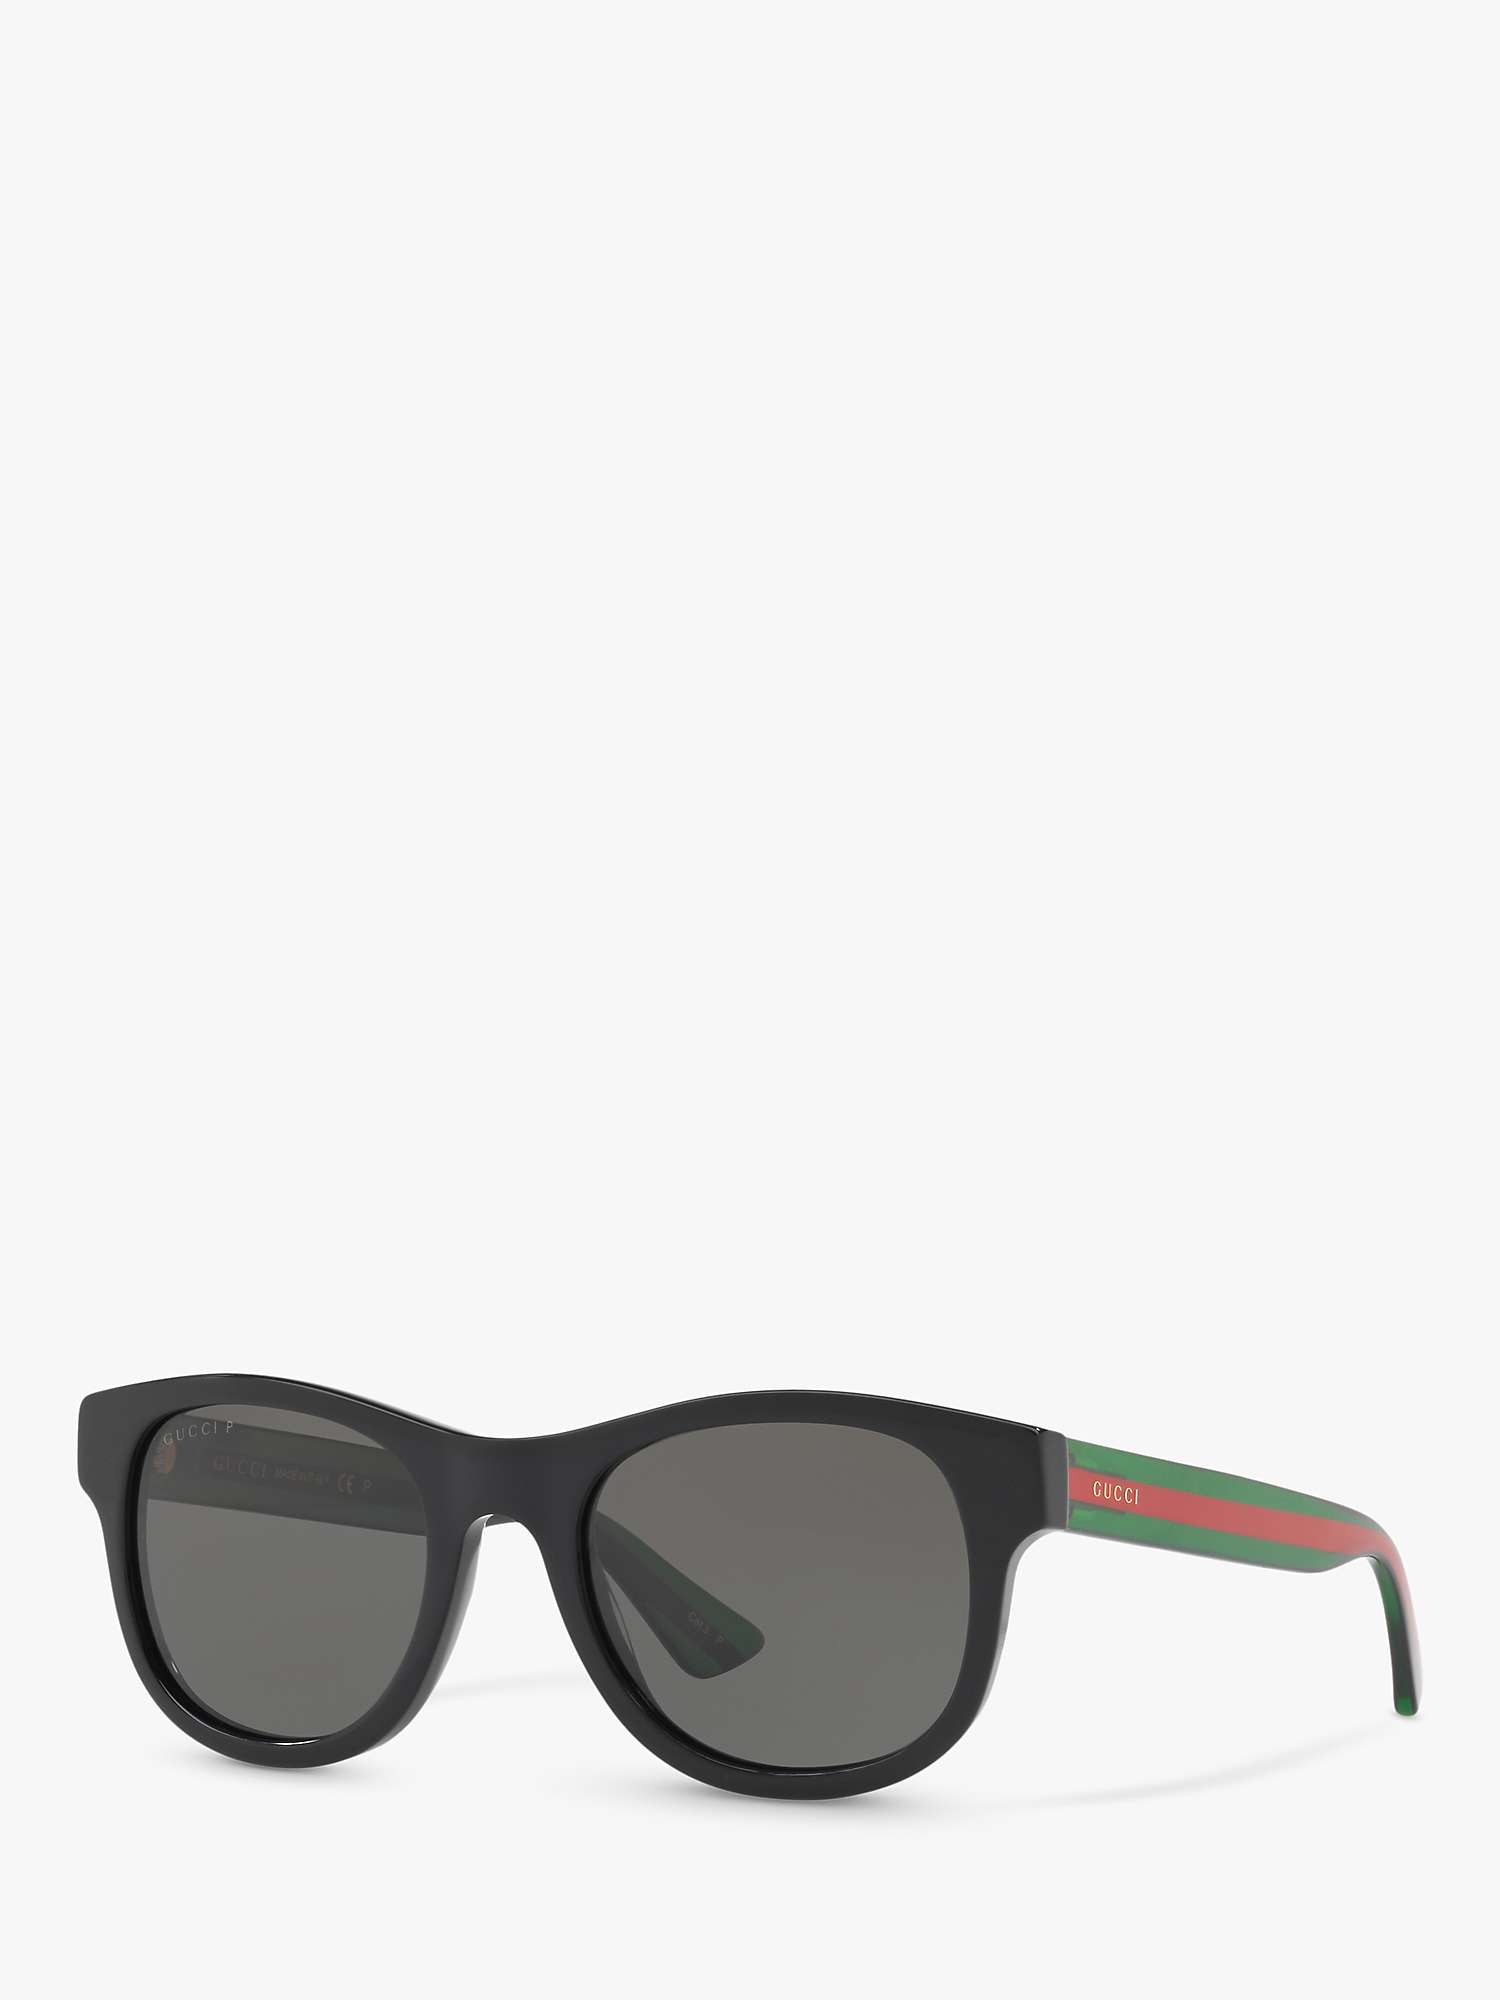 Buy Gucci GG0003SN Men's D-Frame Sunglasses, Black/Green Online at johnlewis.com